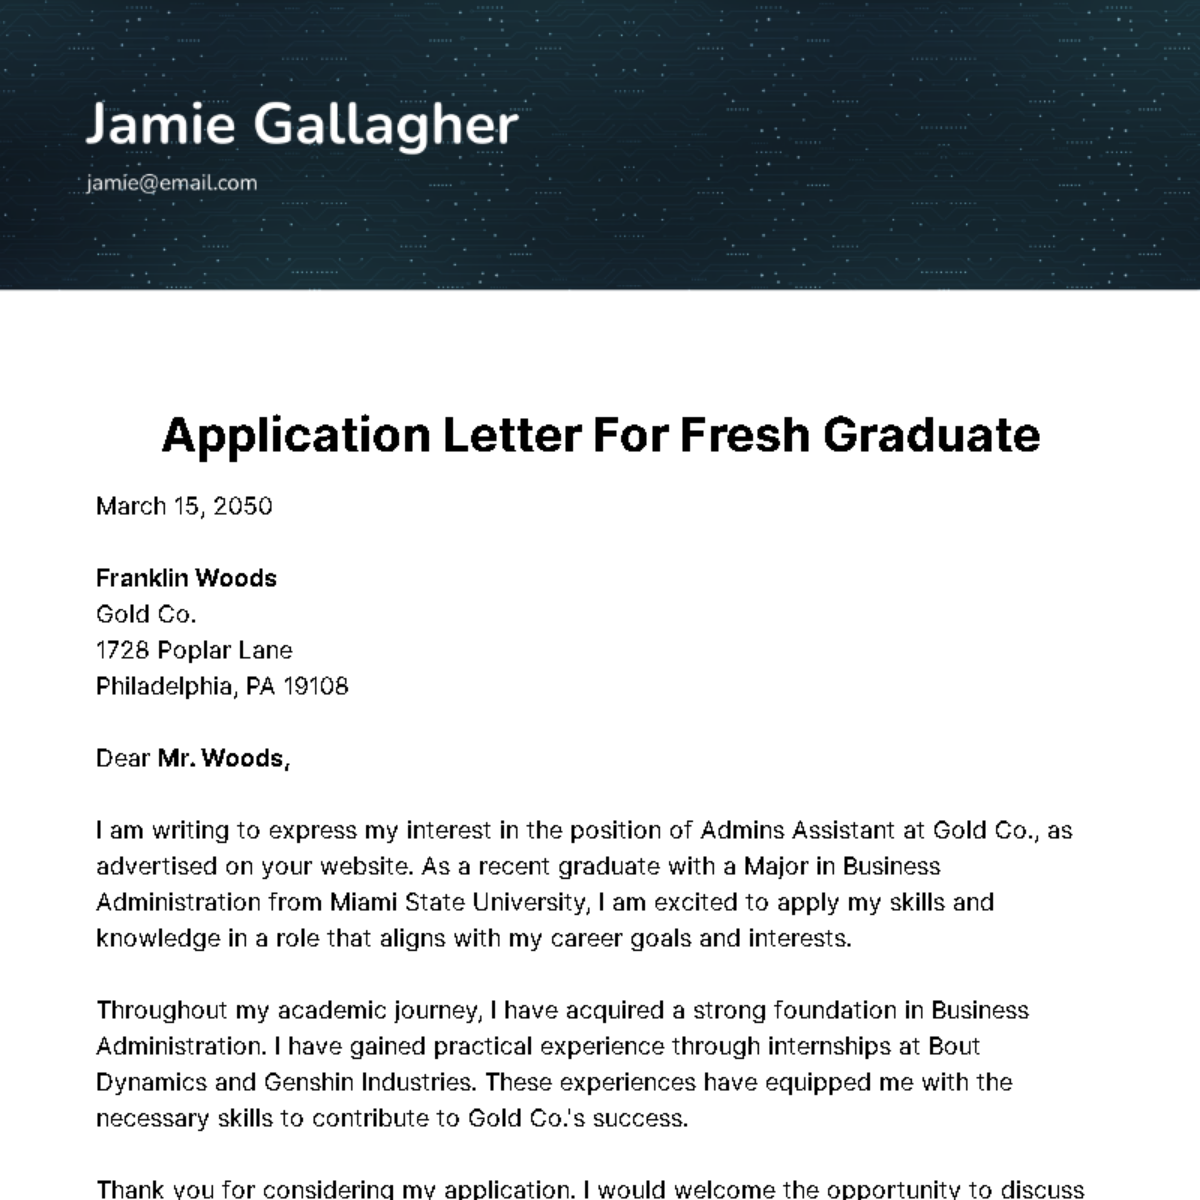 Application Letter for Fresh Graduate Template